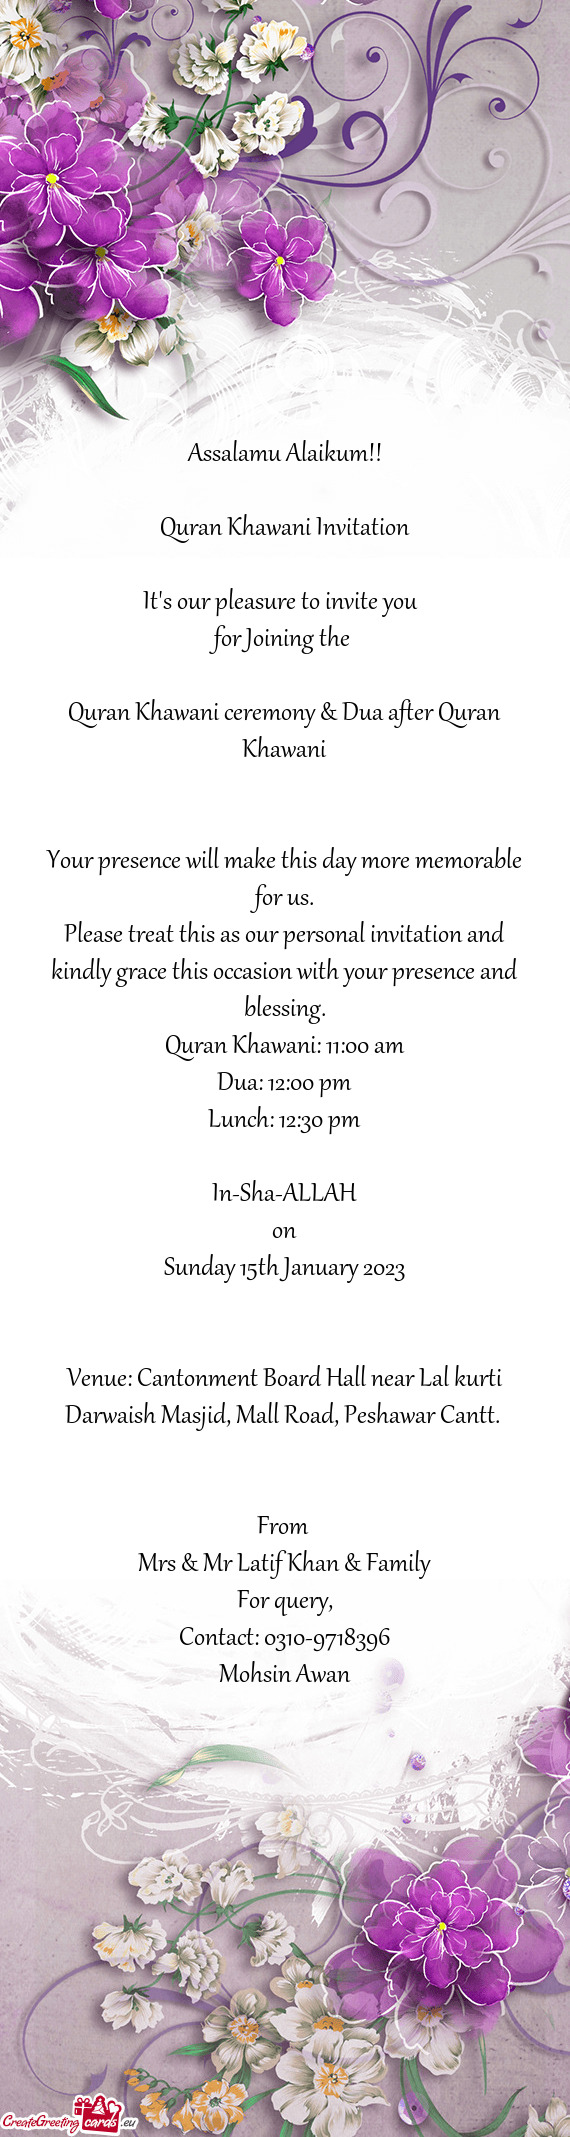 Quran Khawani ceremony & Dua after Quran Khawani